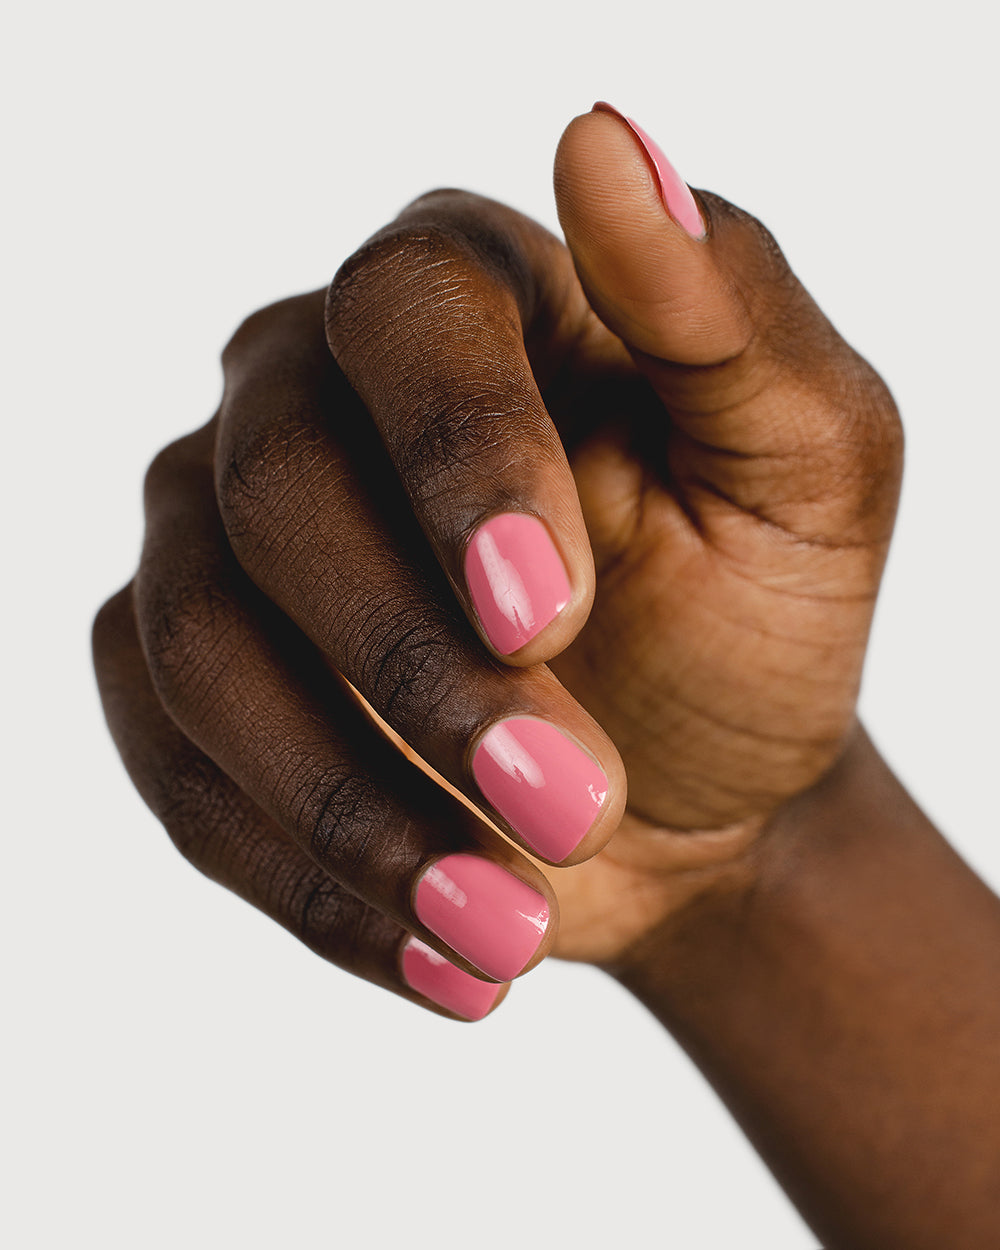 midtone pink nail polish hand swatch on dark skin tone